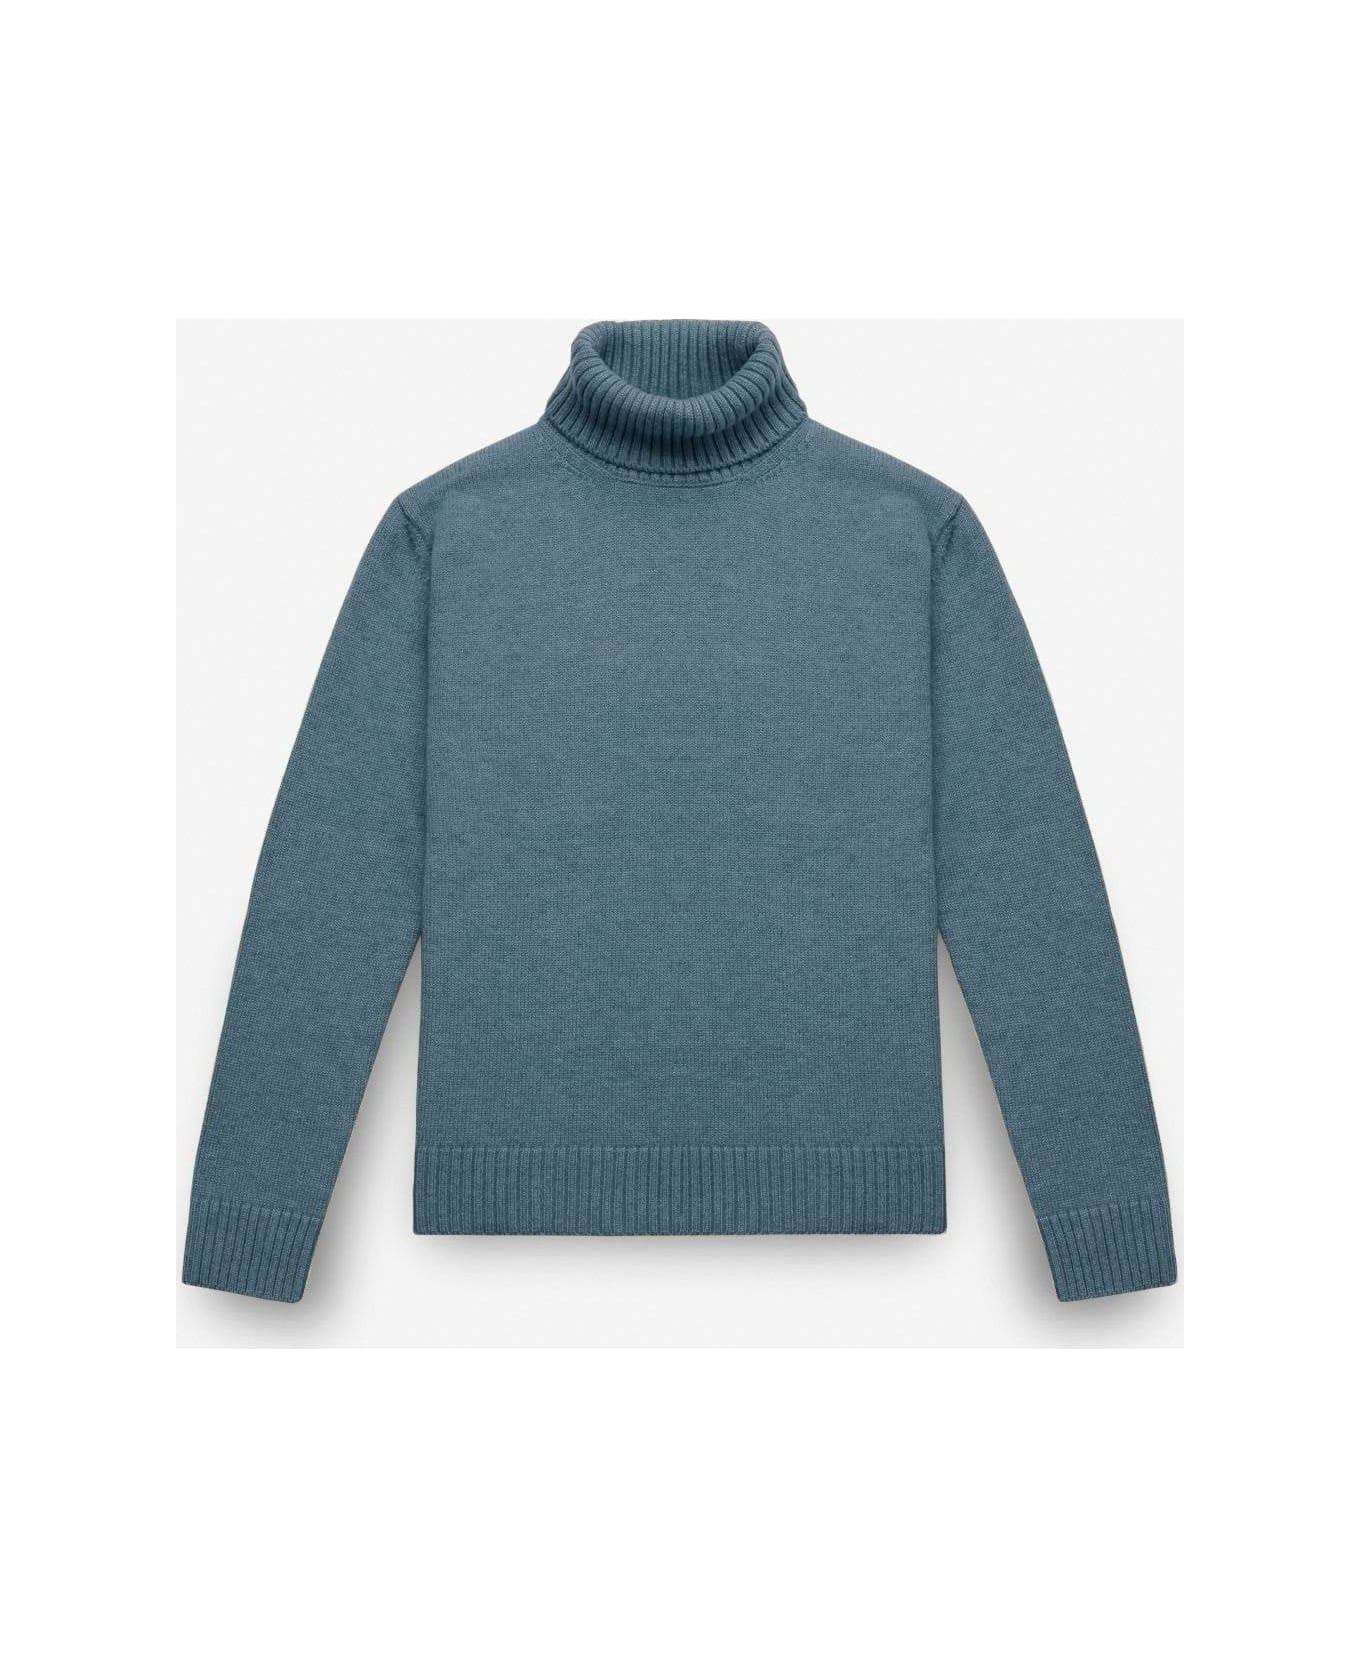 Larusmiani Turtleneck Sweater 'diablerets' Sweater - Teal